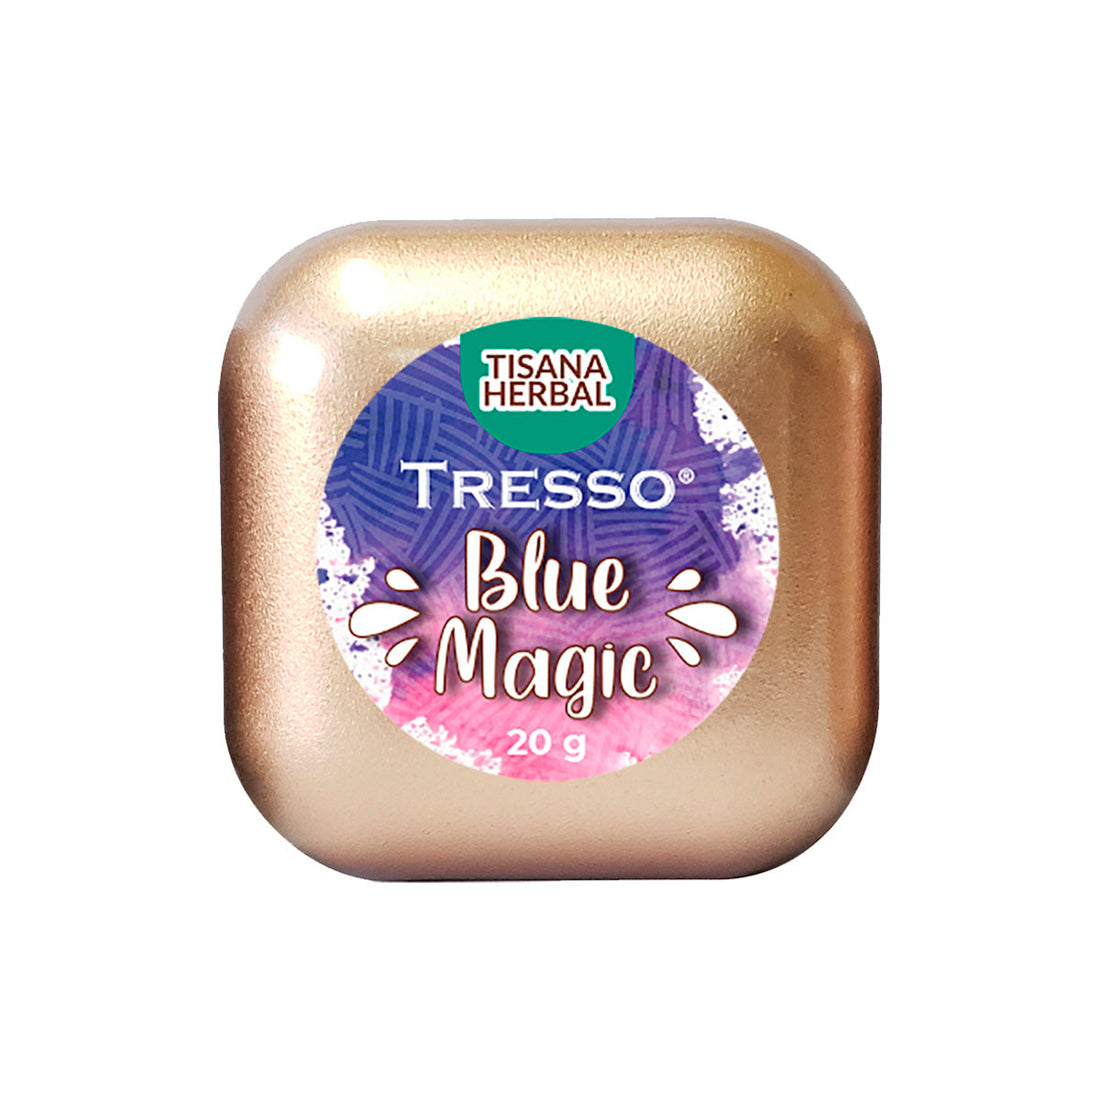 Tisana Herbal: Blue Magic 20 G Tisana TRESSO® 20 g 